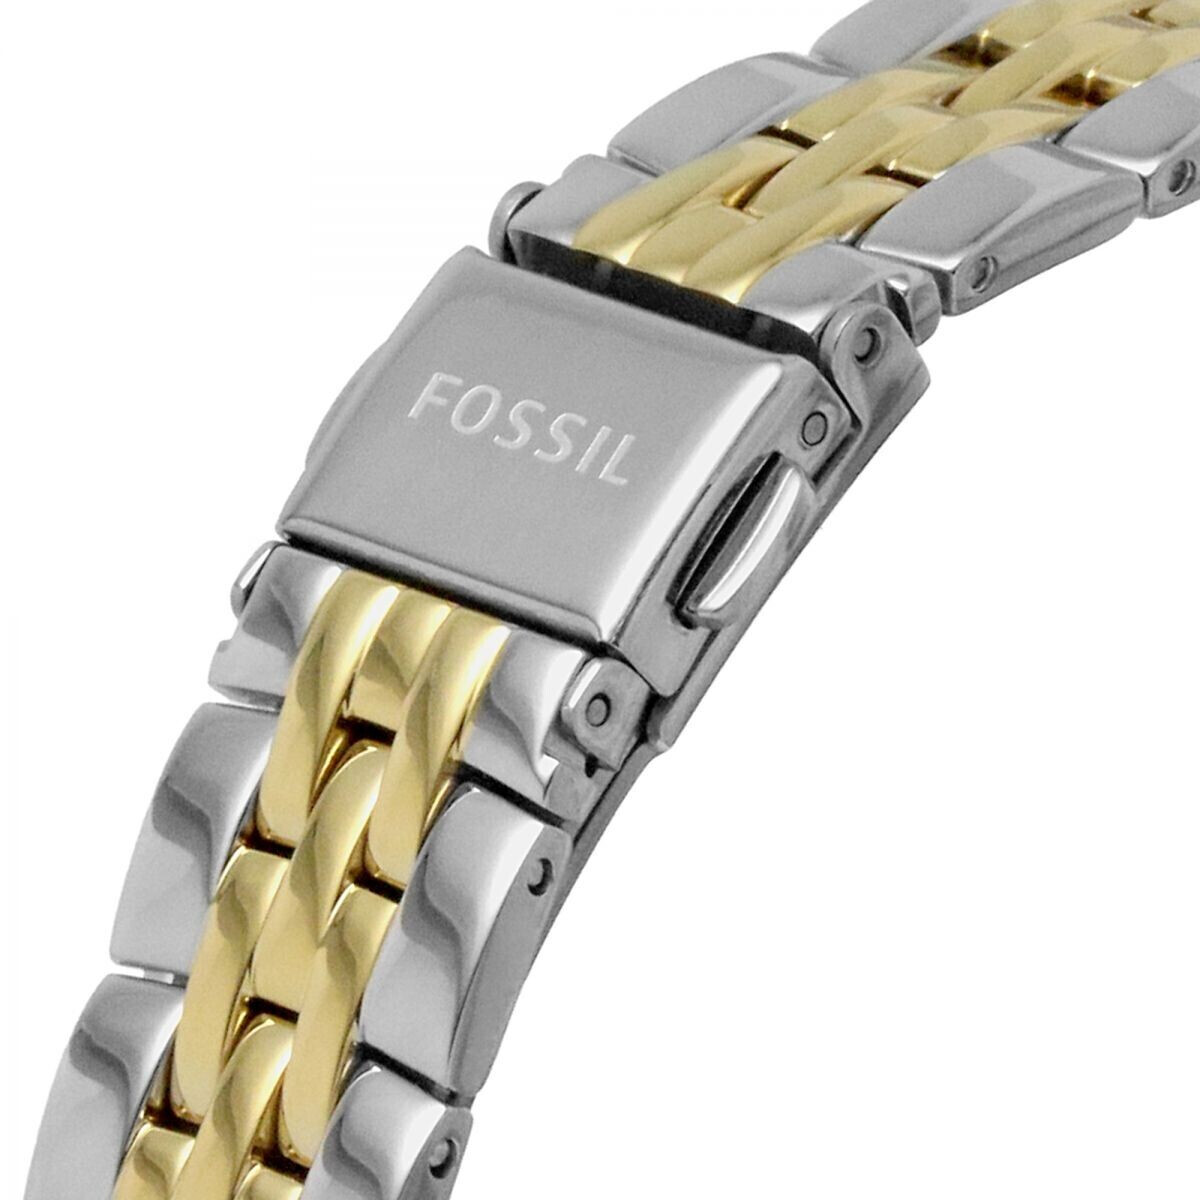 Fossil ES5166 silver/gold ab 120,83 € | Preisvergleich bei